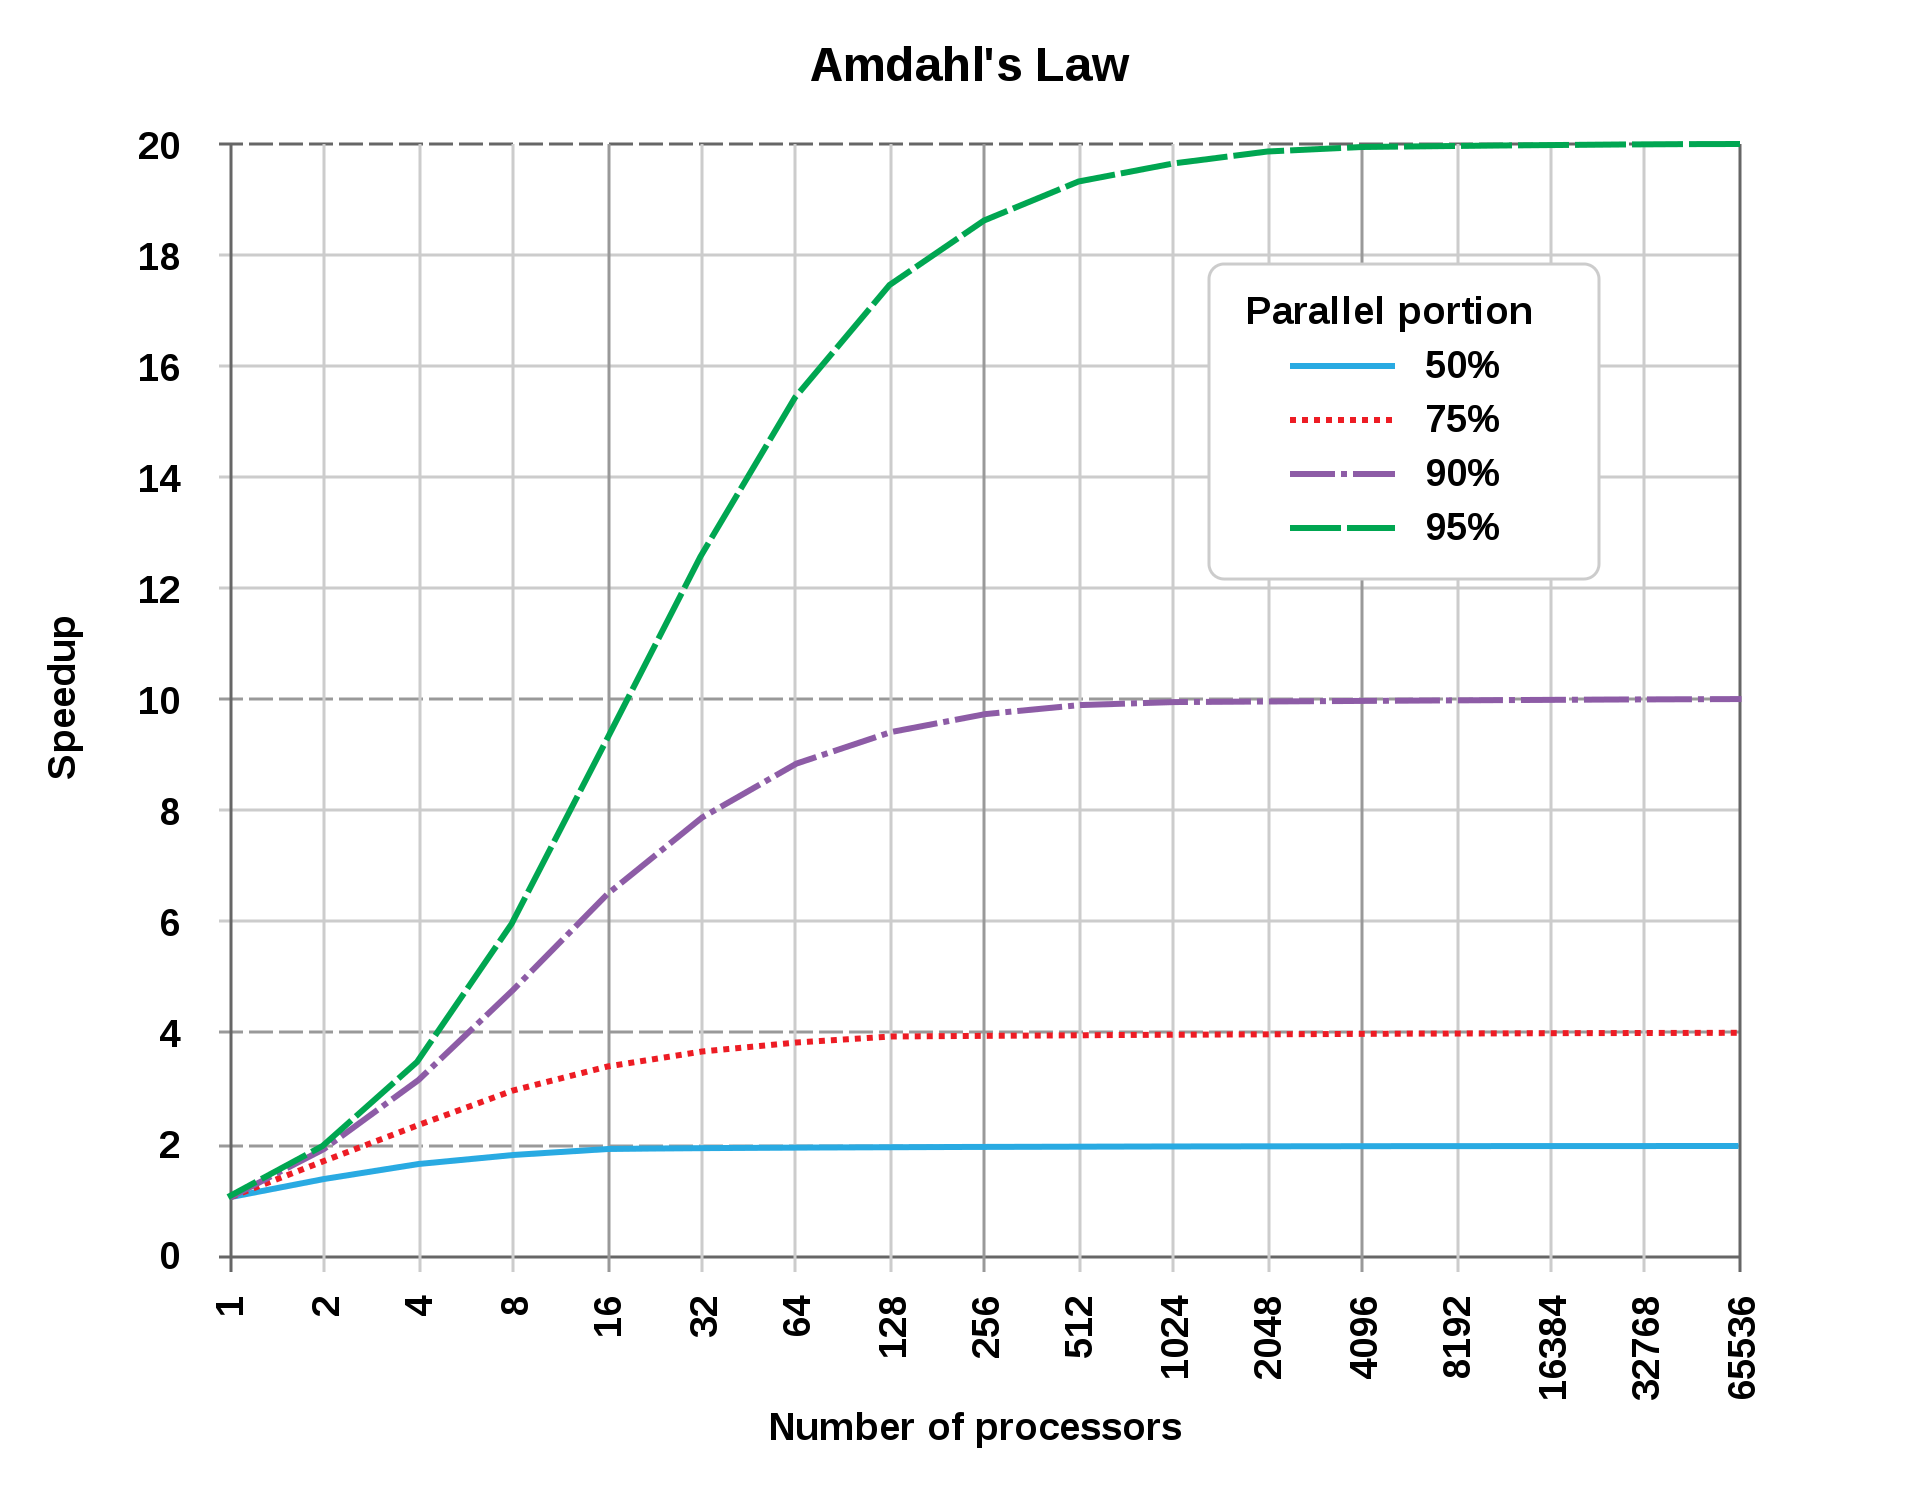 AmdahlsLaw graph